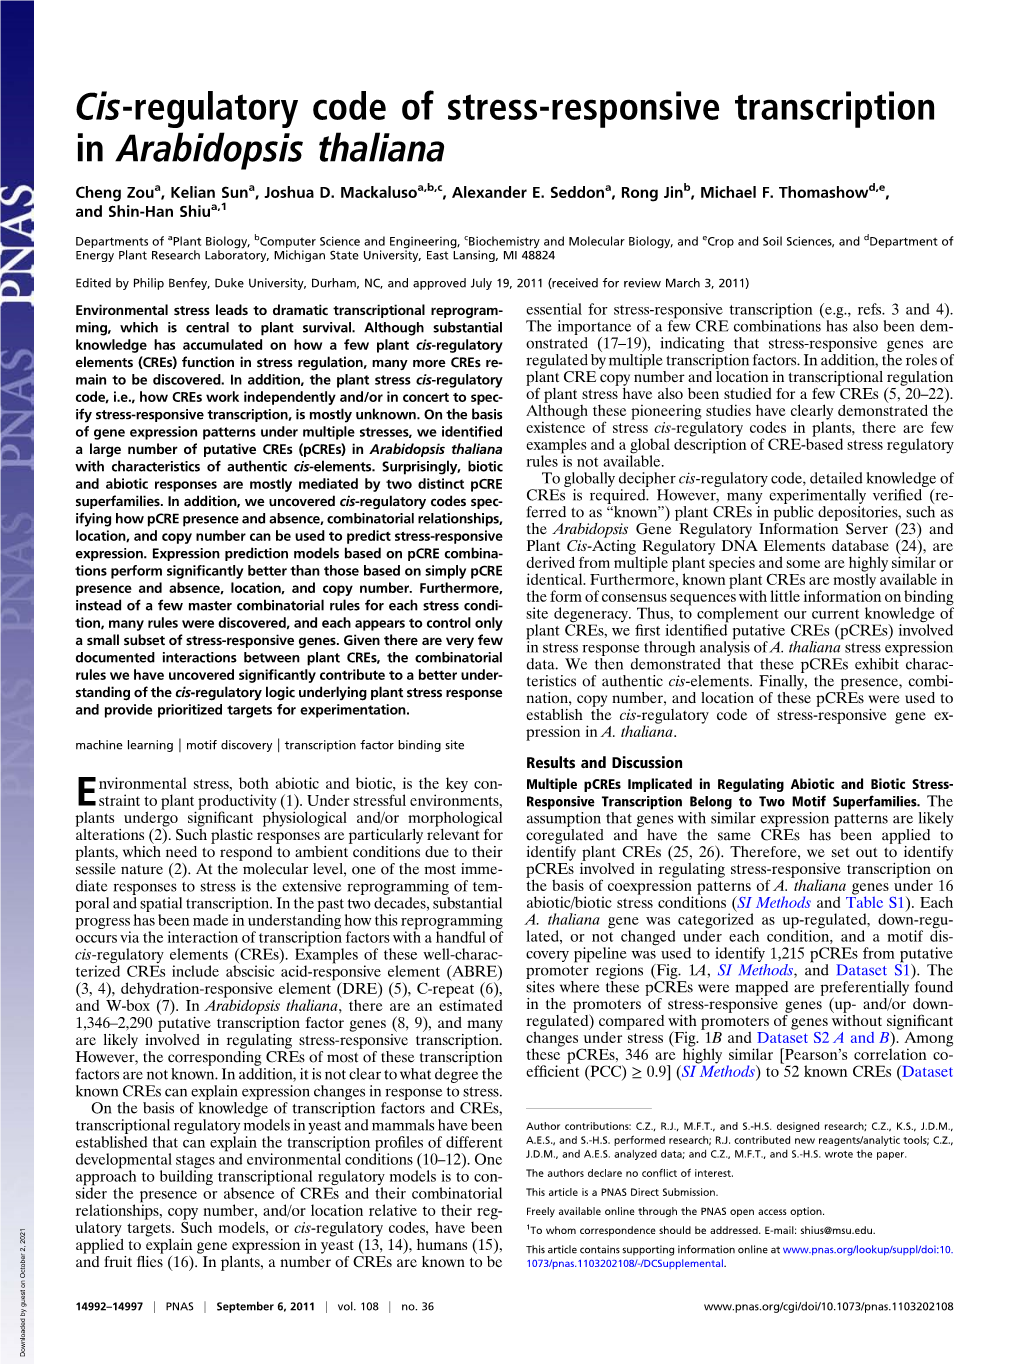 Cis-Regulatory Code of Stress-Responsive Transcription in Arabidopsis Thaliana